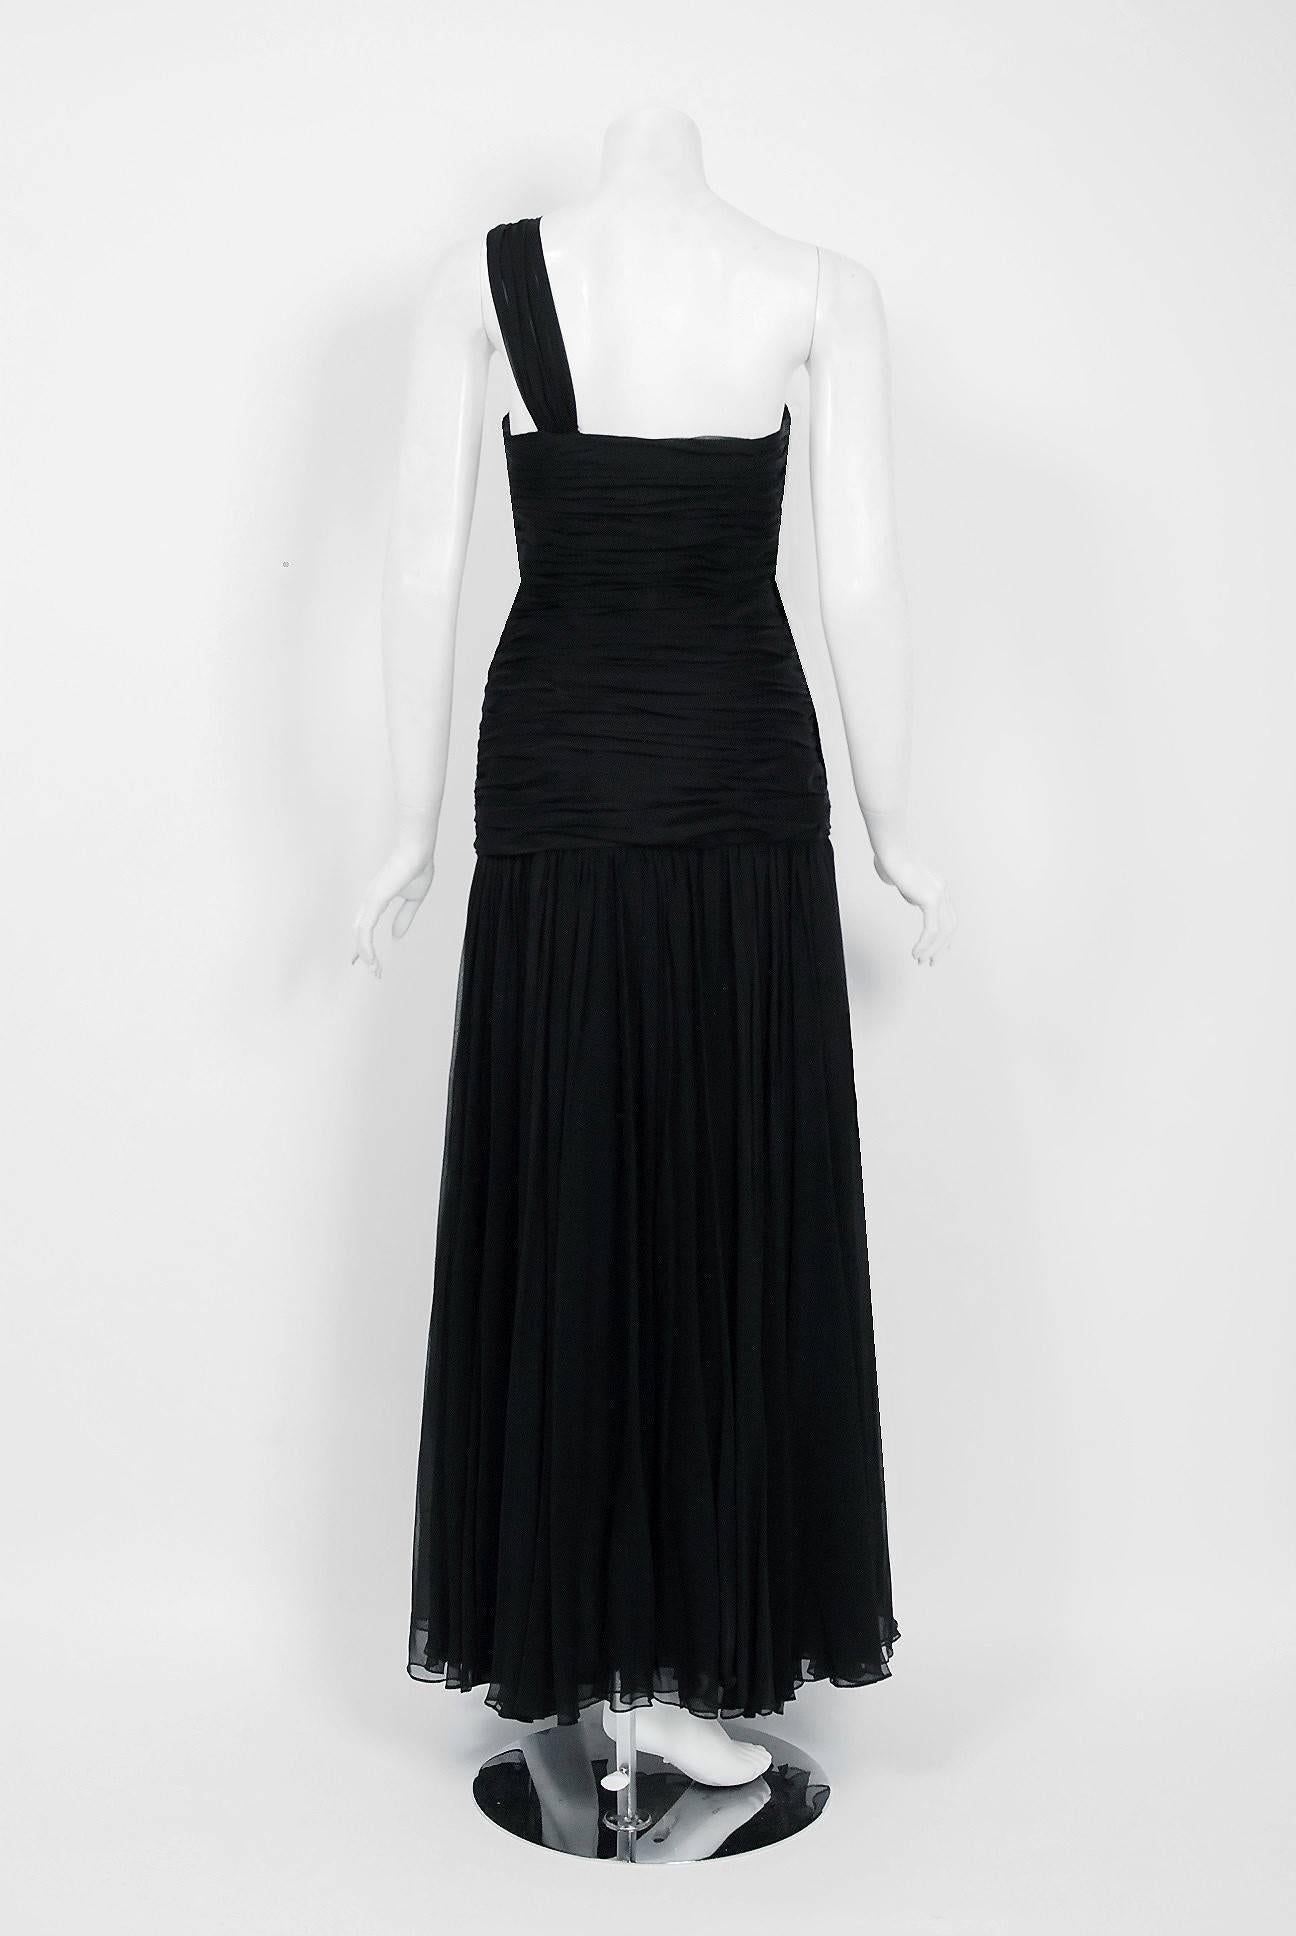 Women's 1970's Adele Simpson Black Draped Silk Chiffon One-Shoulder Goddess Dress Gown